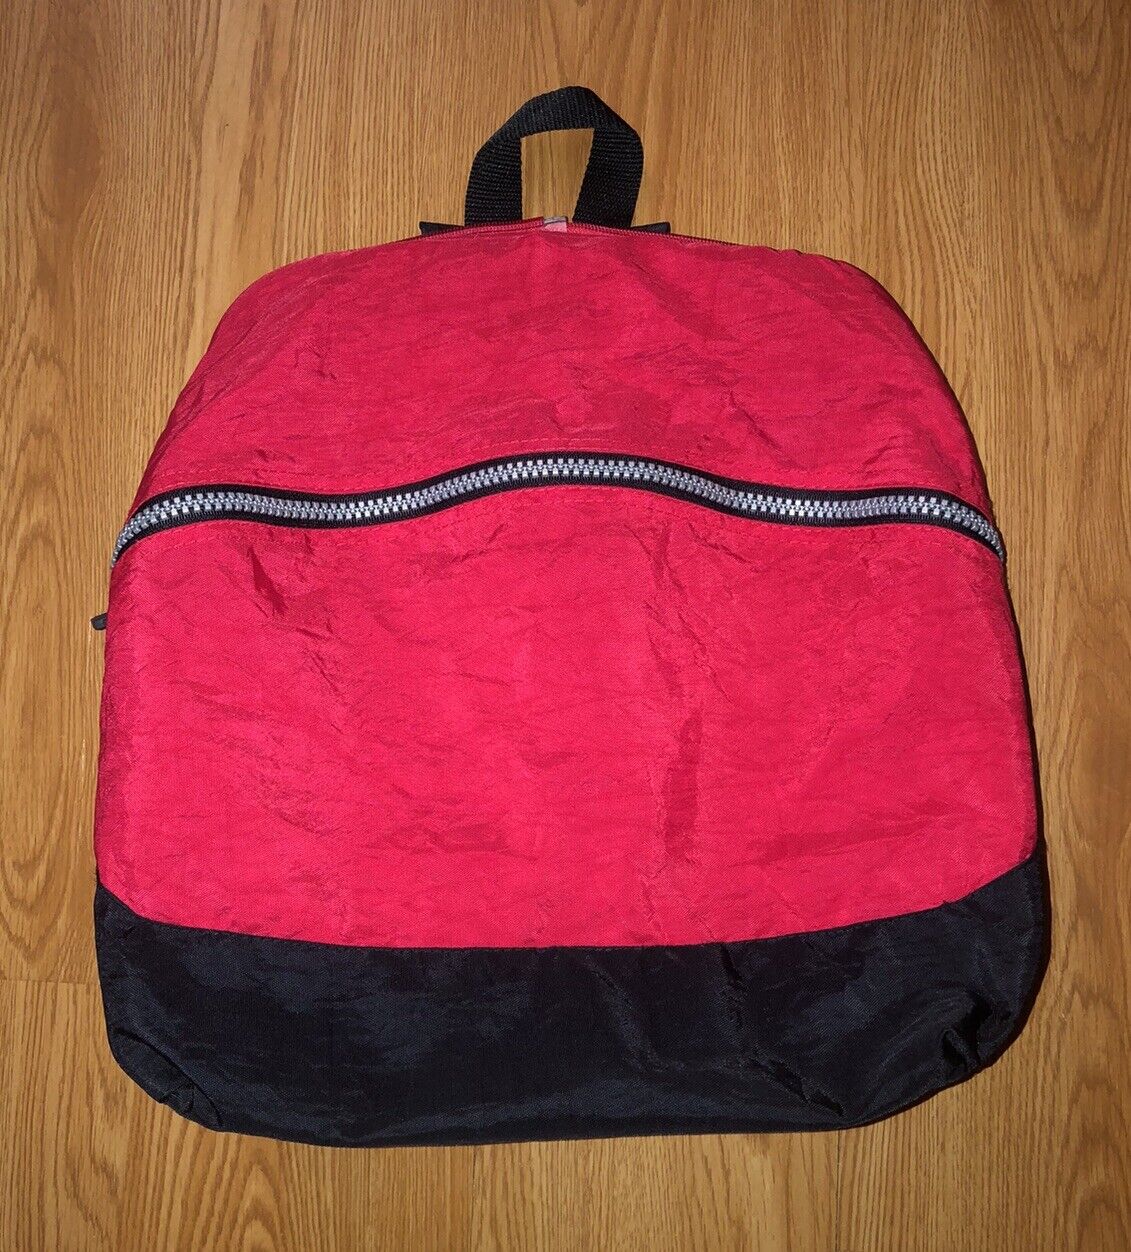 Vintage Marlboro Unlimited Zip Backpack with Adjustable Straps Red Black 90s